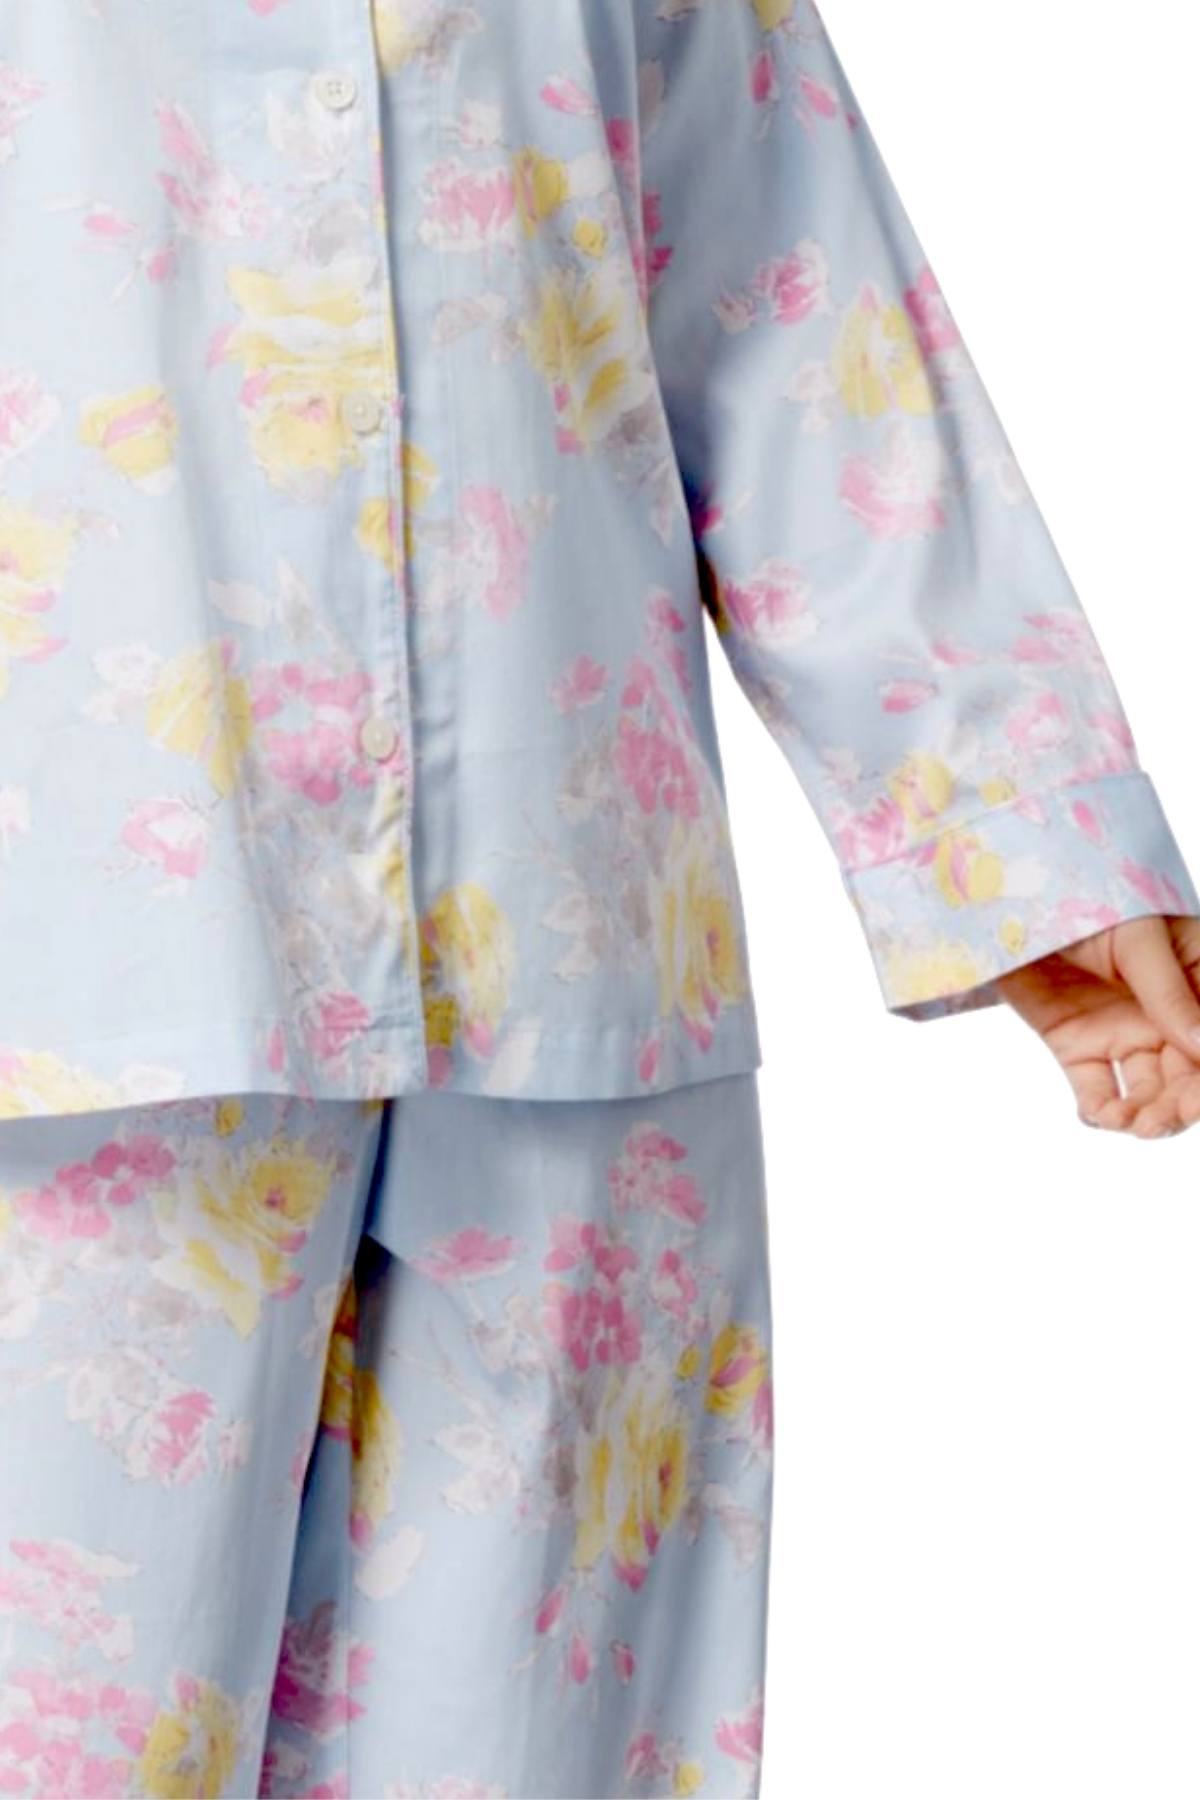 Lauren Ralph Lauren PLUS Blue/Floral-Print Cotton/Sateen Pajama Set